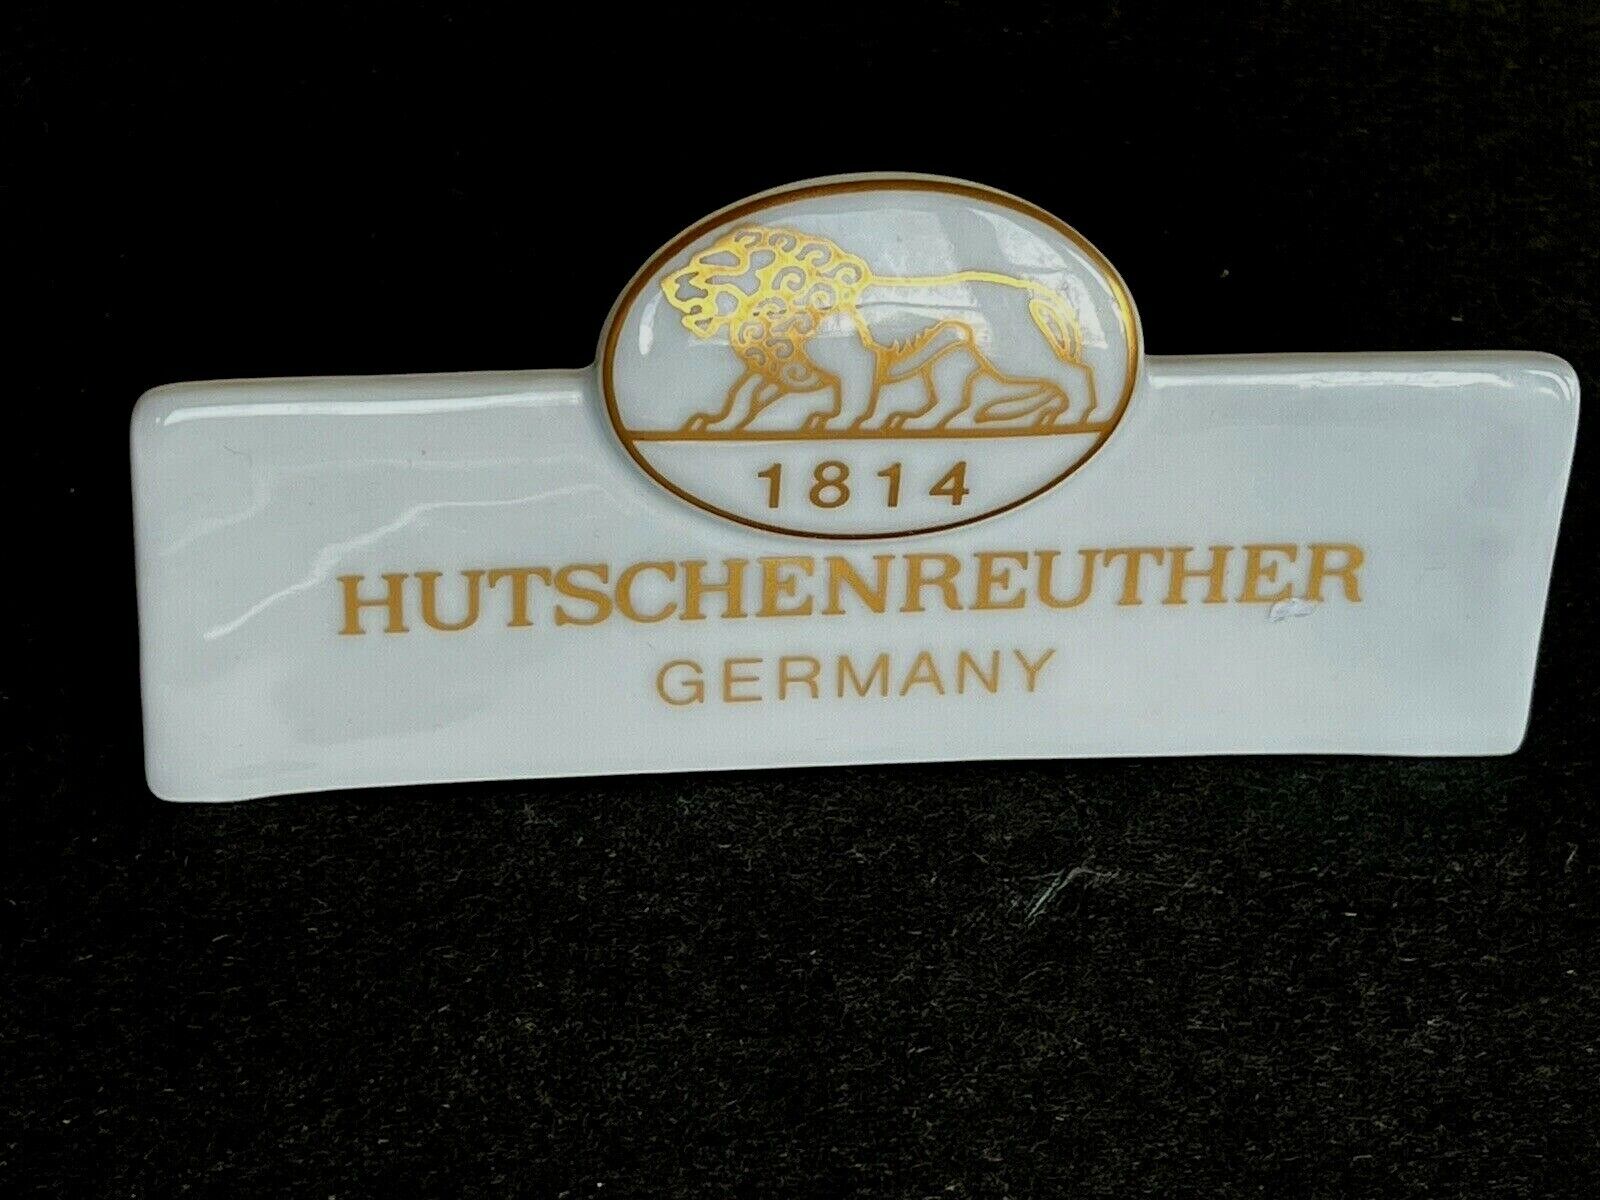 VTG Antique 1814 Hutschenreuther Germany Advertising Store Dealer Display Sign 